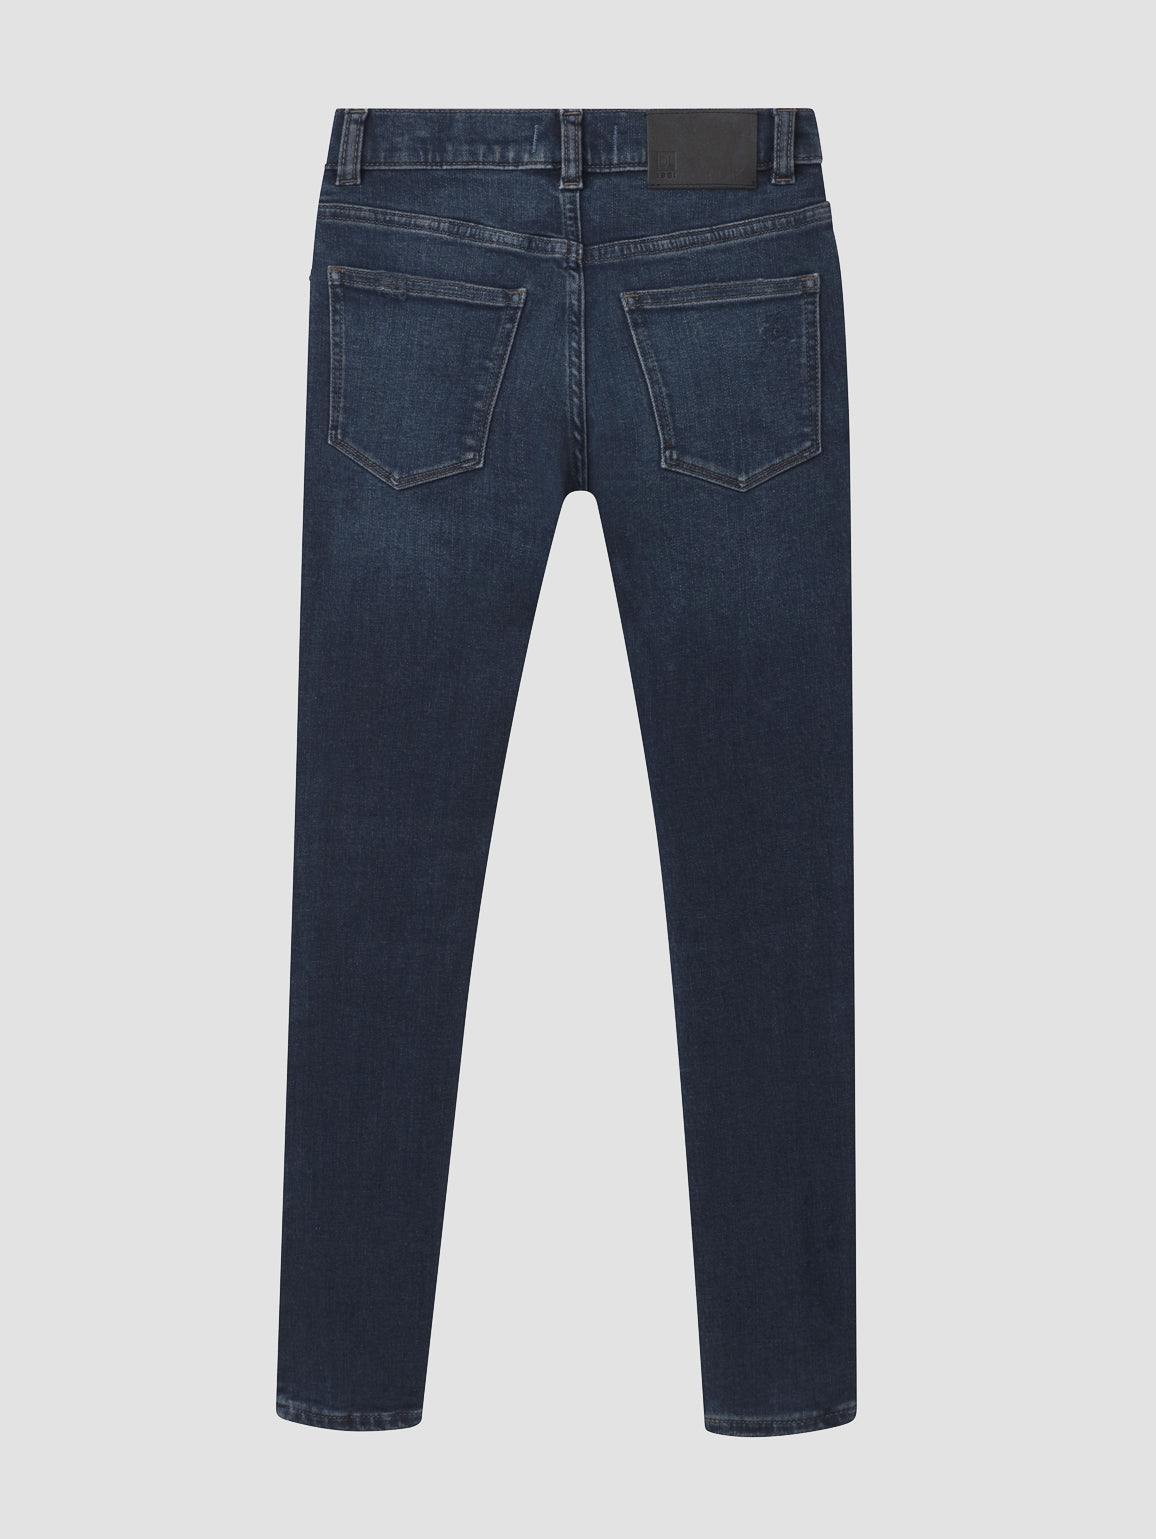 Zane Skinny Jeans | Cove Busted